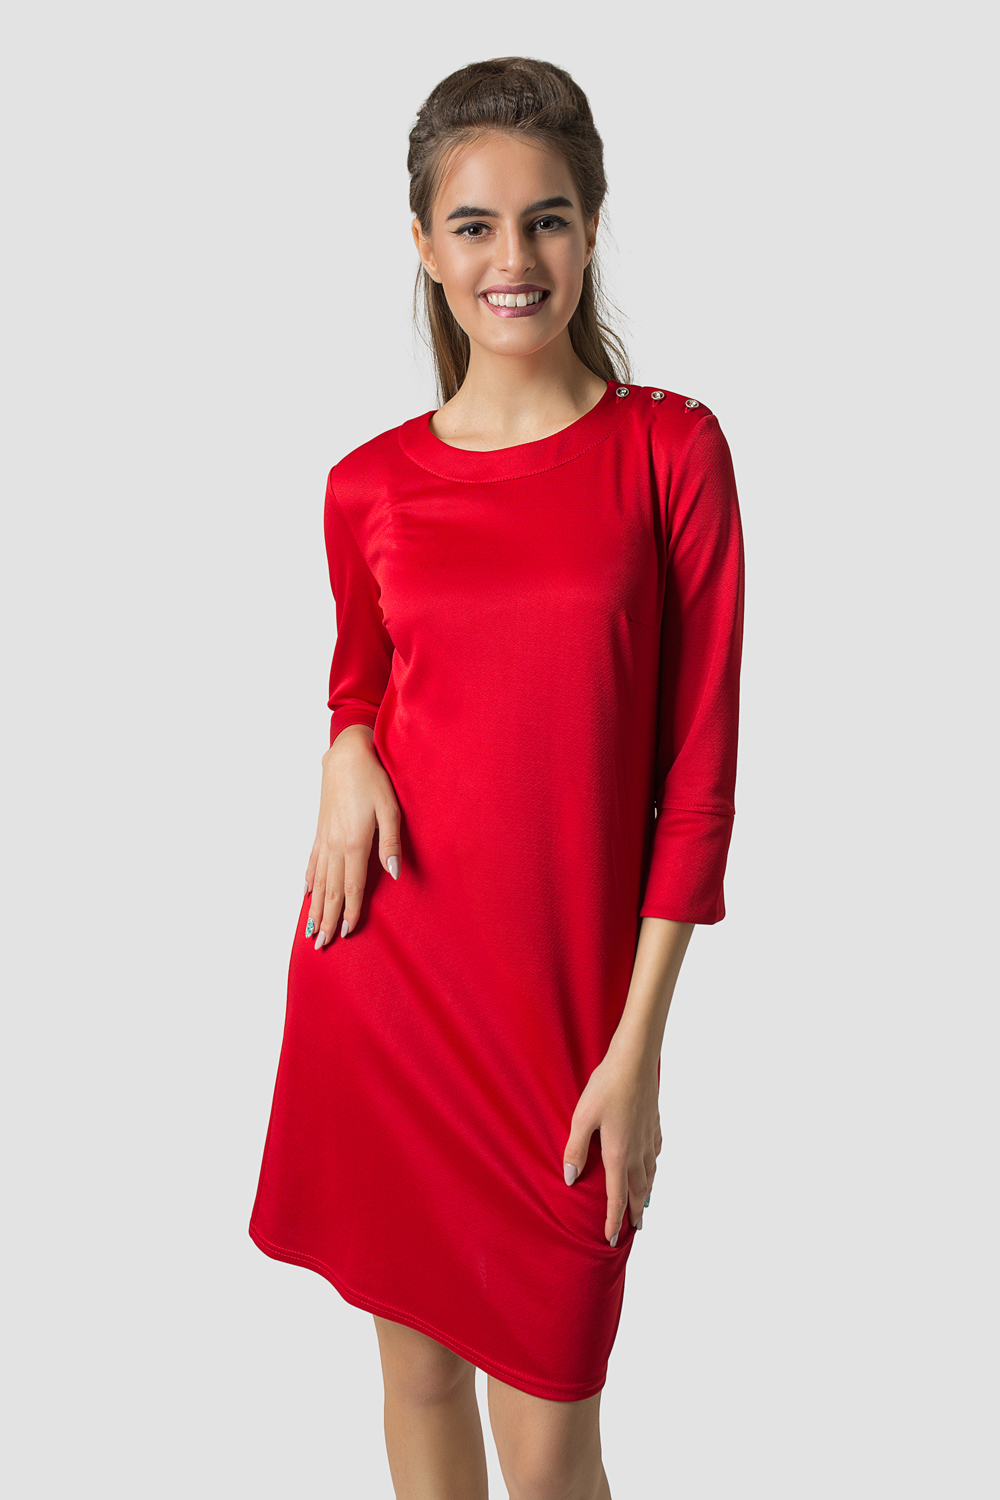 Classic dress in red